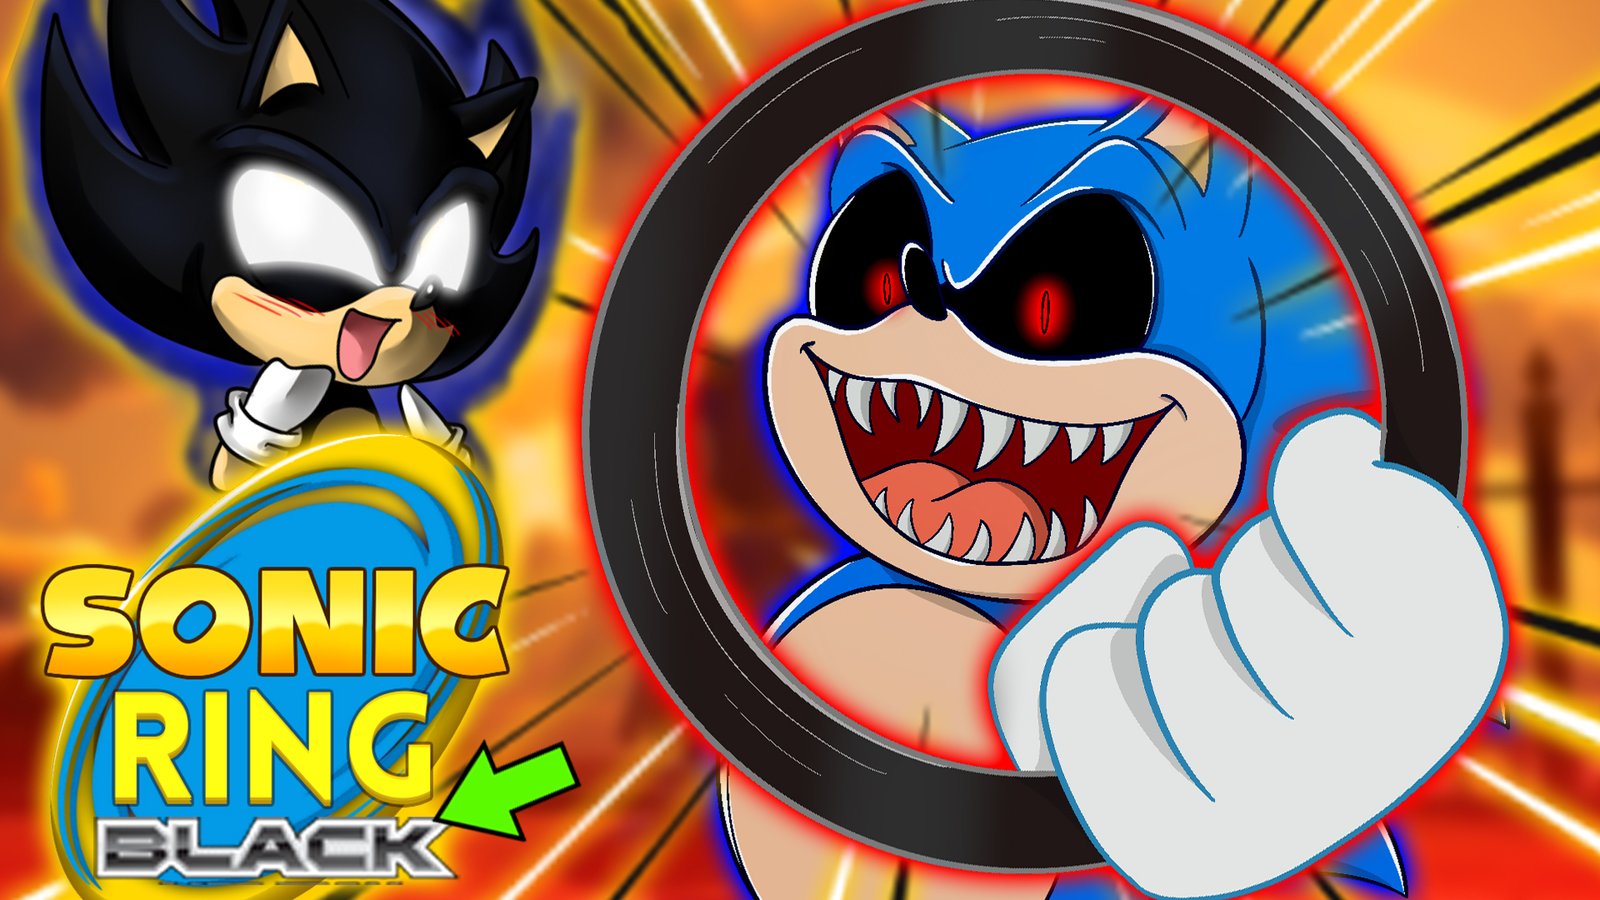 Sonic black ring